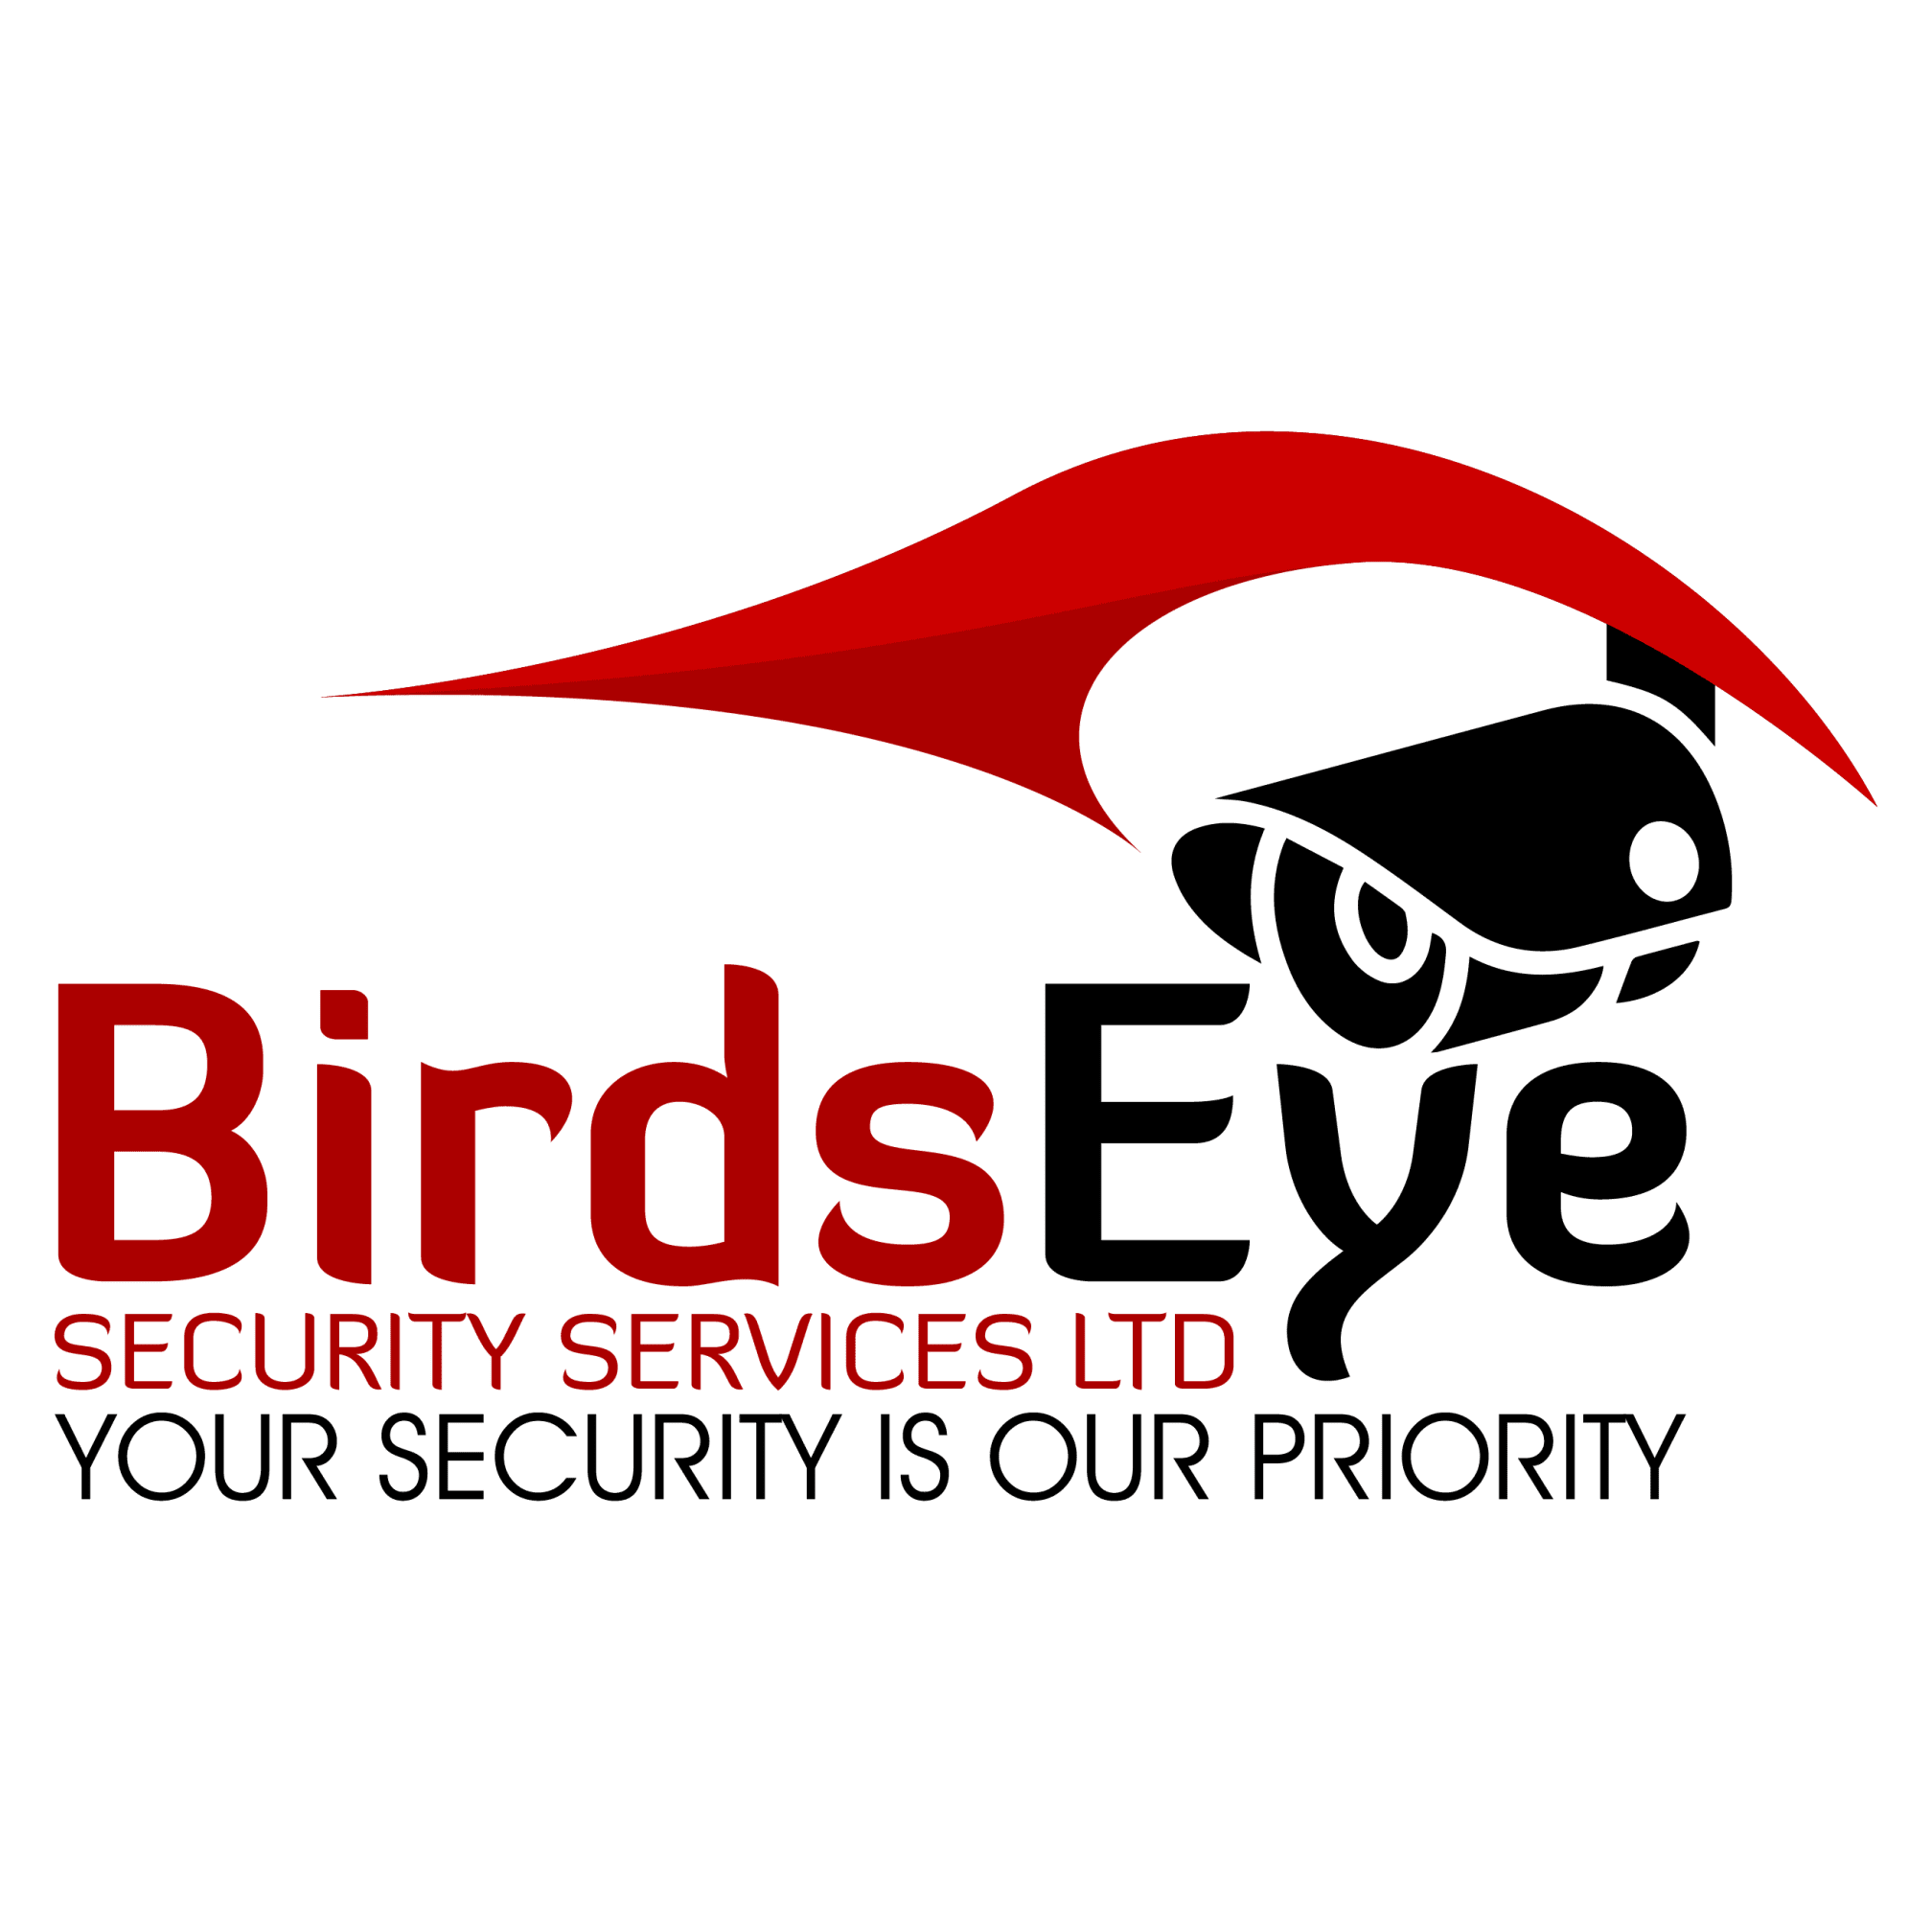 Birds Eye Security Services Ltd - Grays, Essex RM17 6LY - 07554 927068 | ShowMeLocal.com